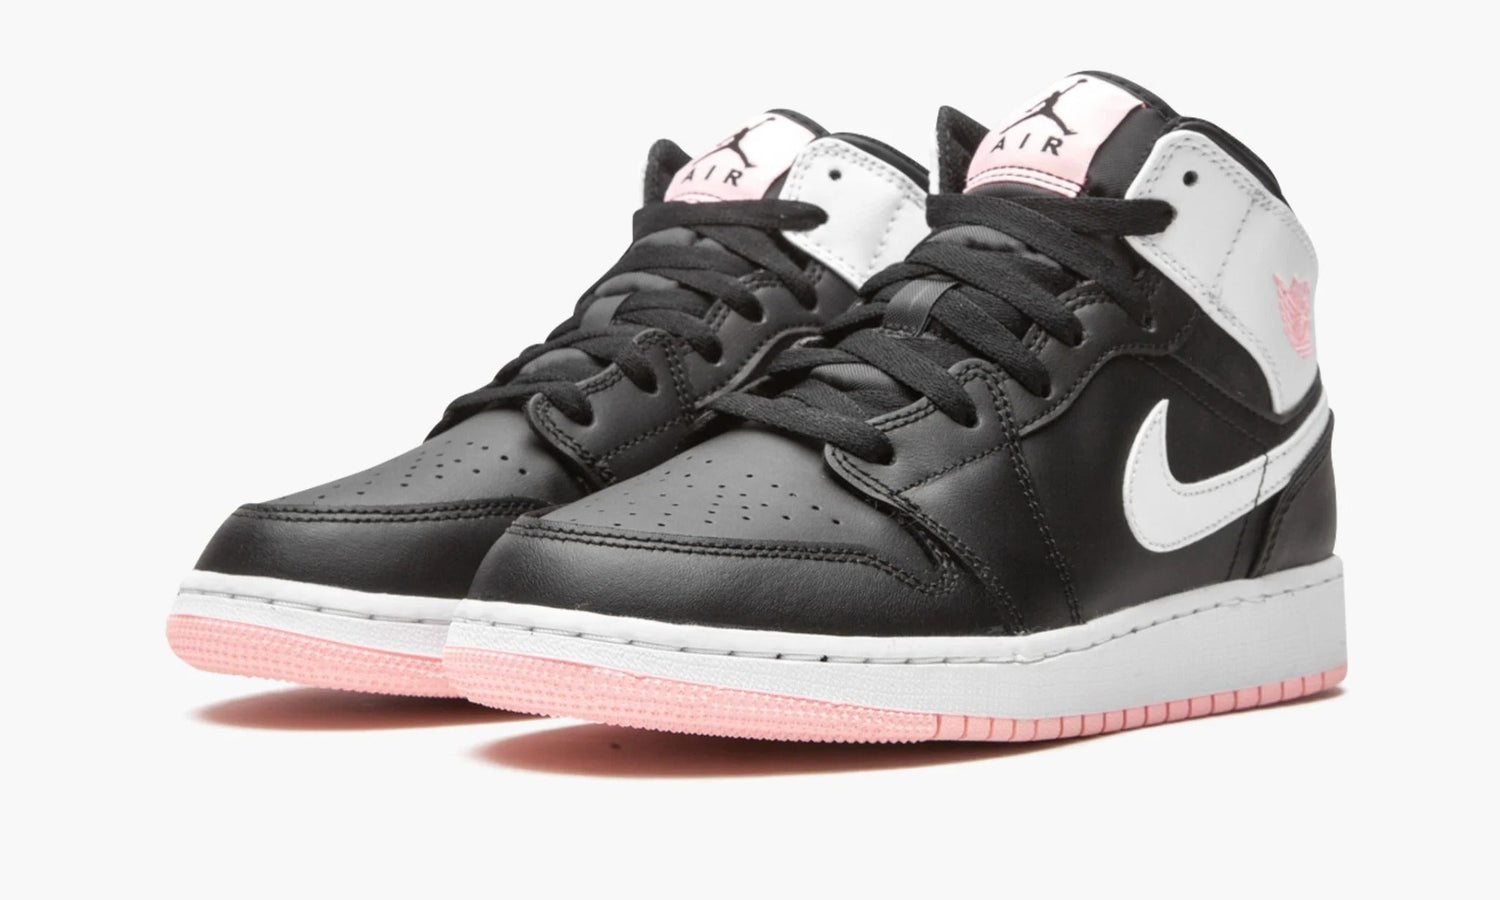 Nike Air Jordan 1 Mid GS "Arctic Pink Black" - 555112-062 | Grailshop